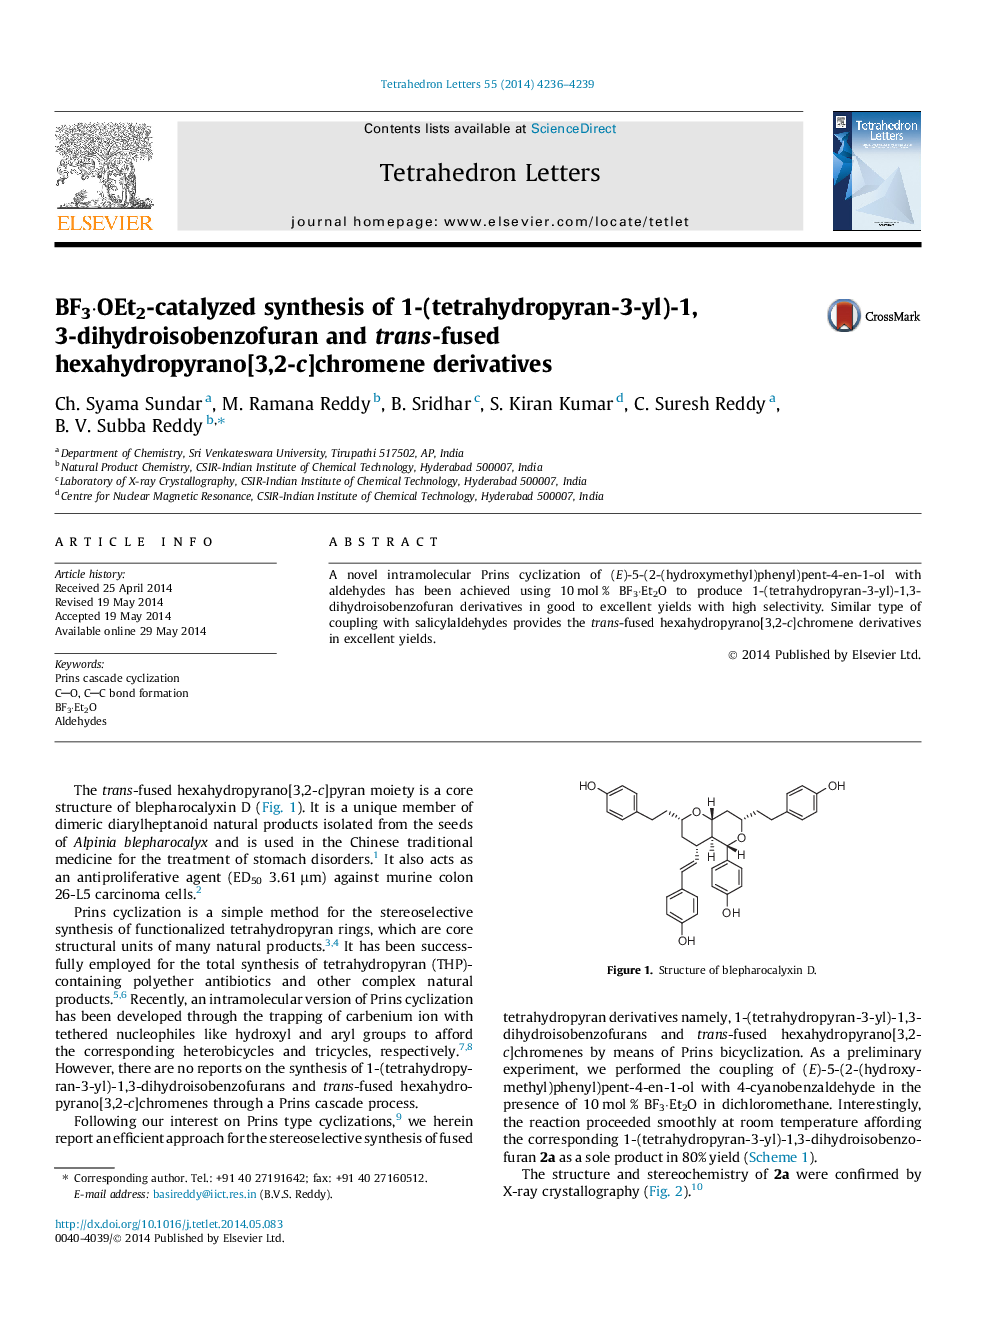 BF3·OEt2-catalyzed synthesis of 1-(tetrahydropyran-3-yl)-1,3-dihydroisobenzofuran and trans-fused hexahydropyrano[3,2-c]chromene derivatives